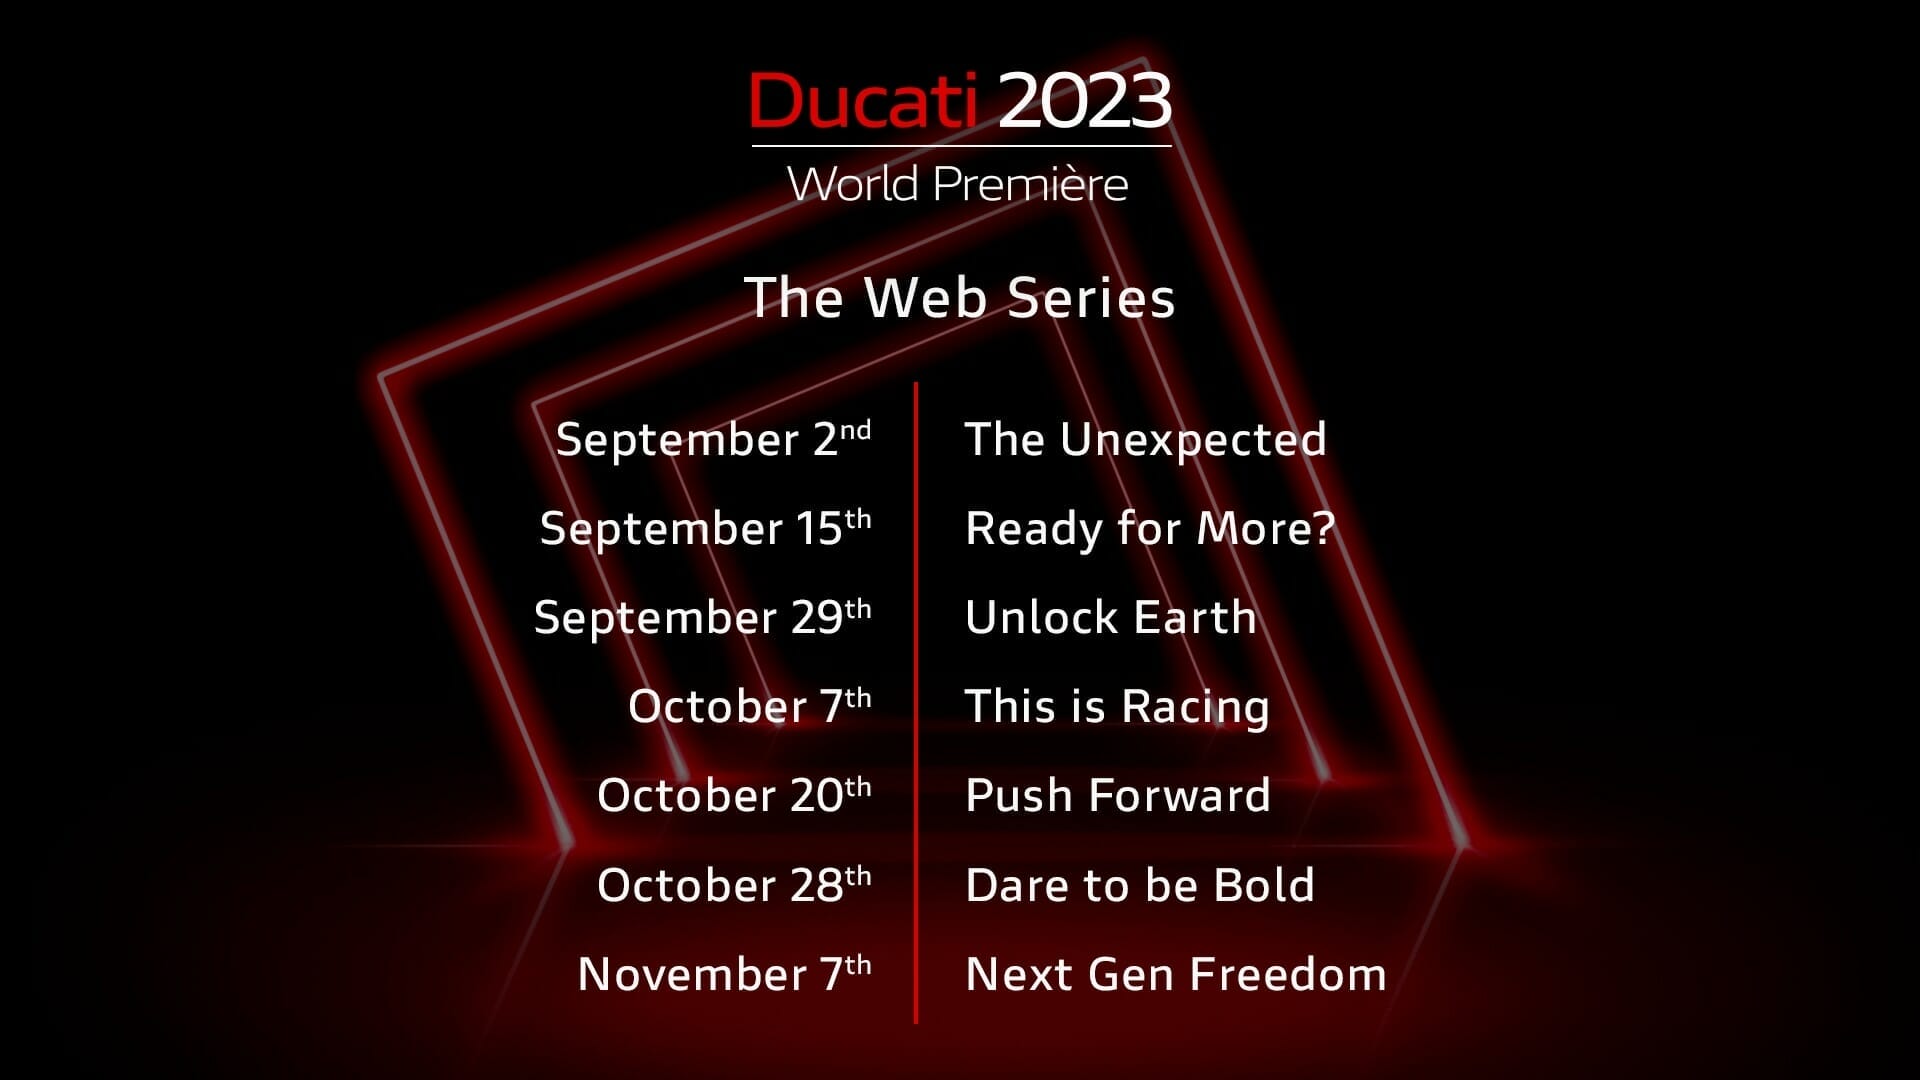 Ducati announces seven presentations - Ducati World Premiere 2023 - MOTORCYCLES.NEWS